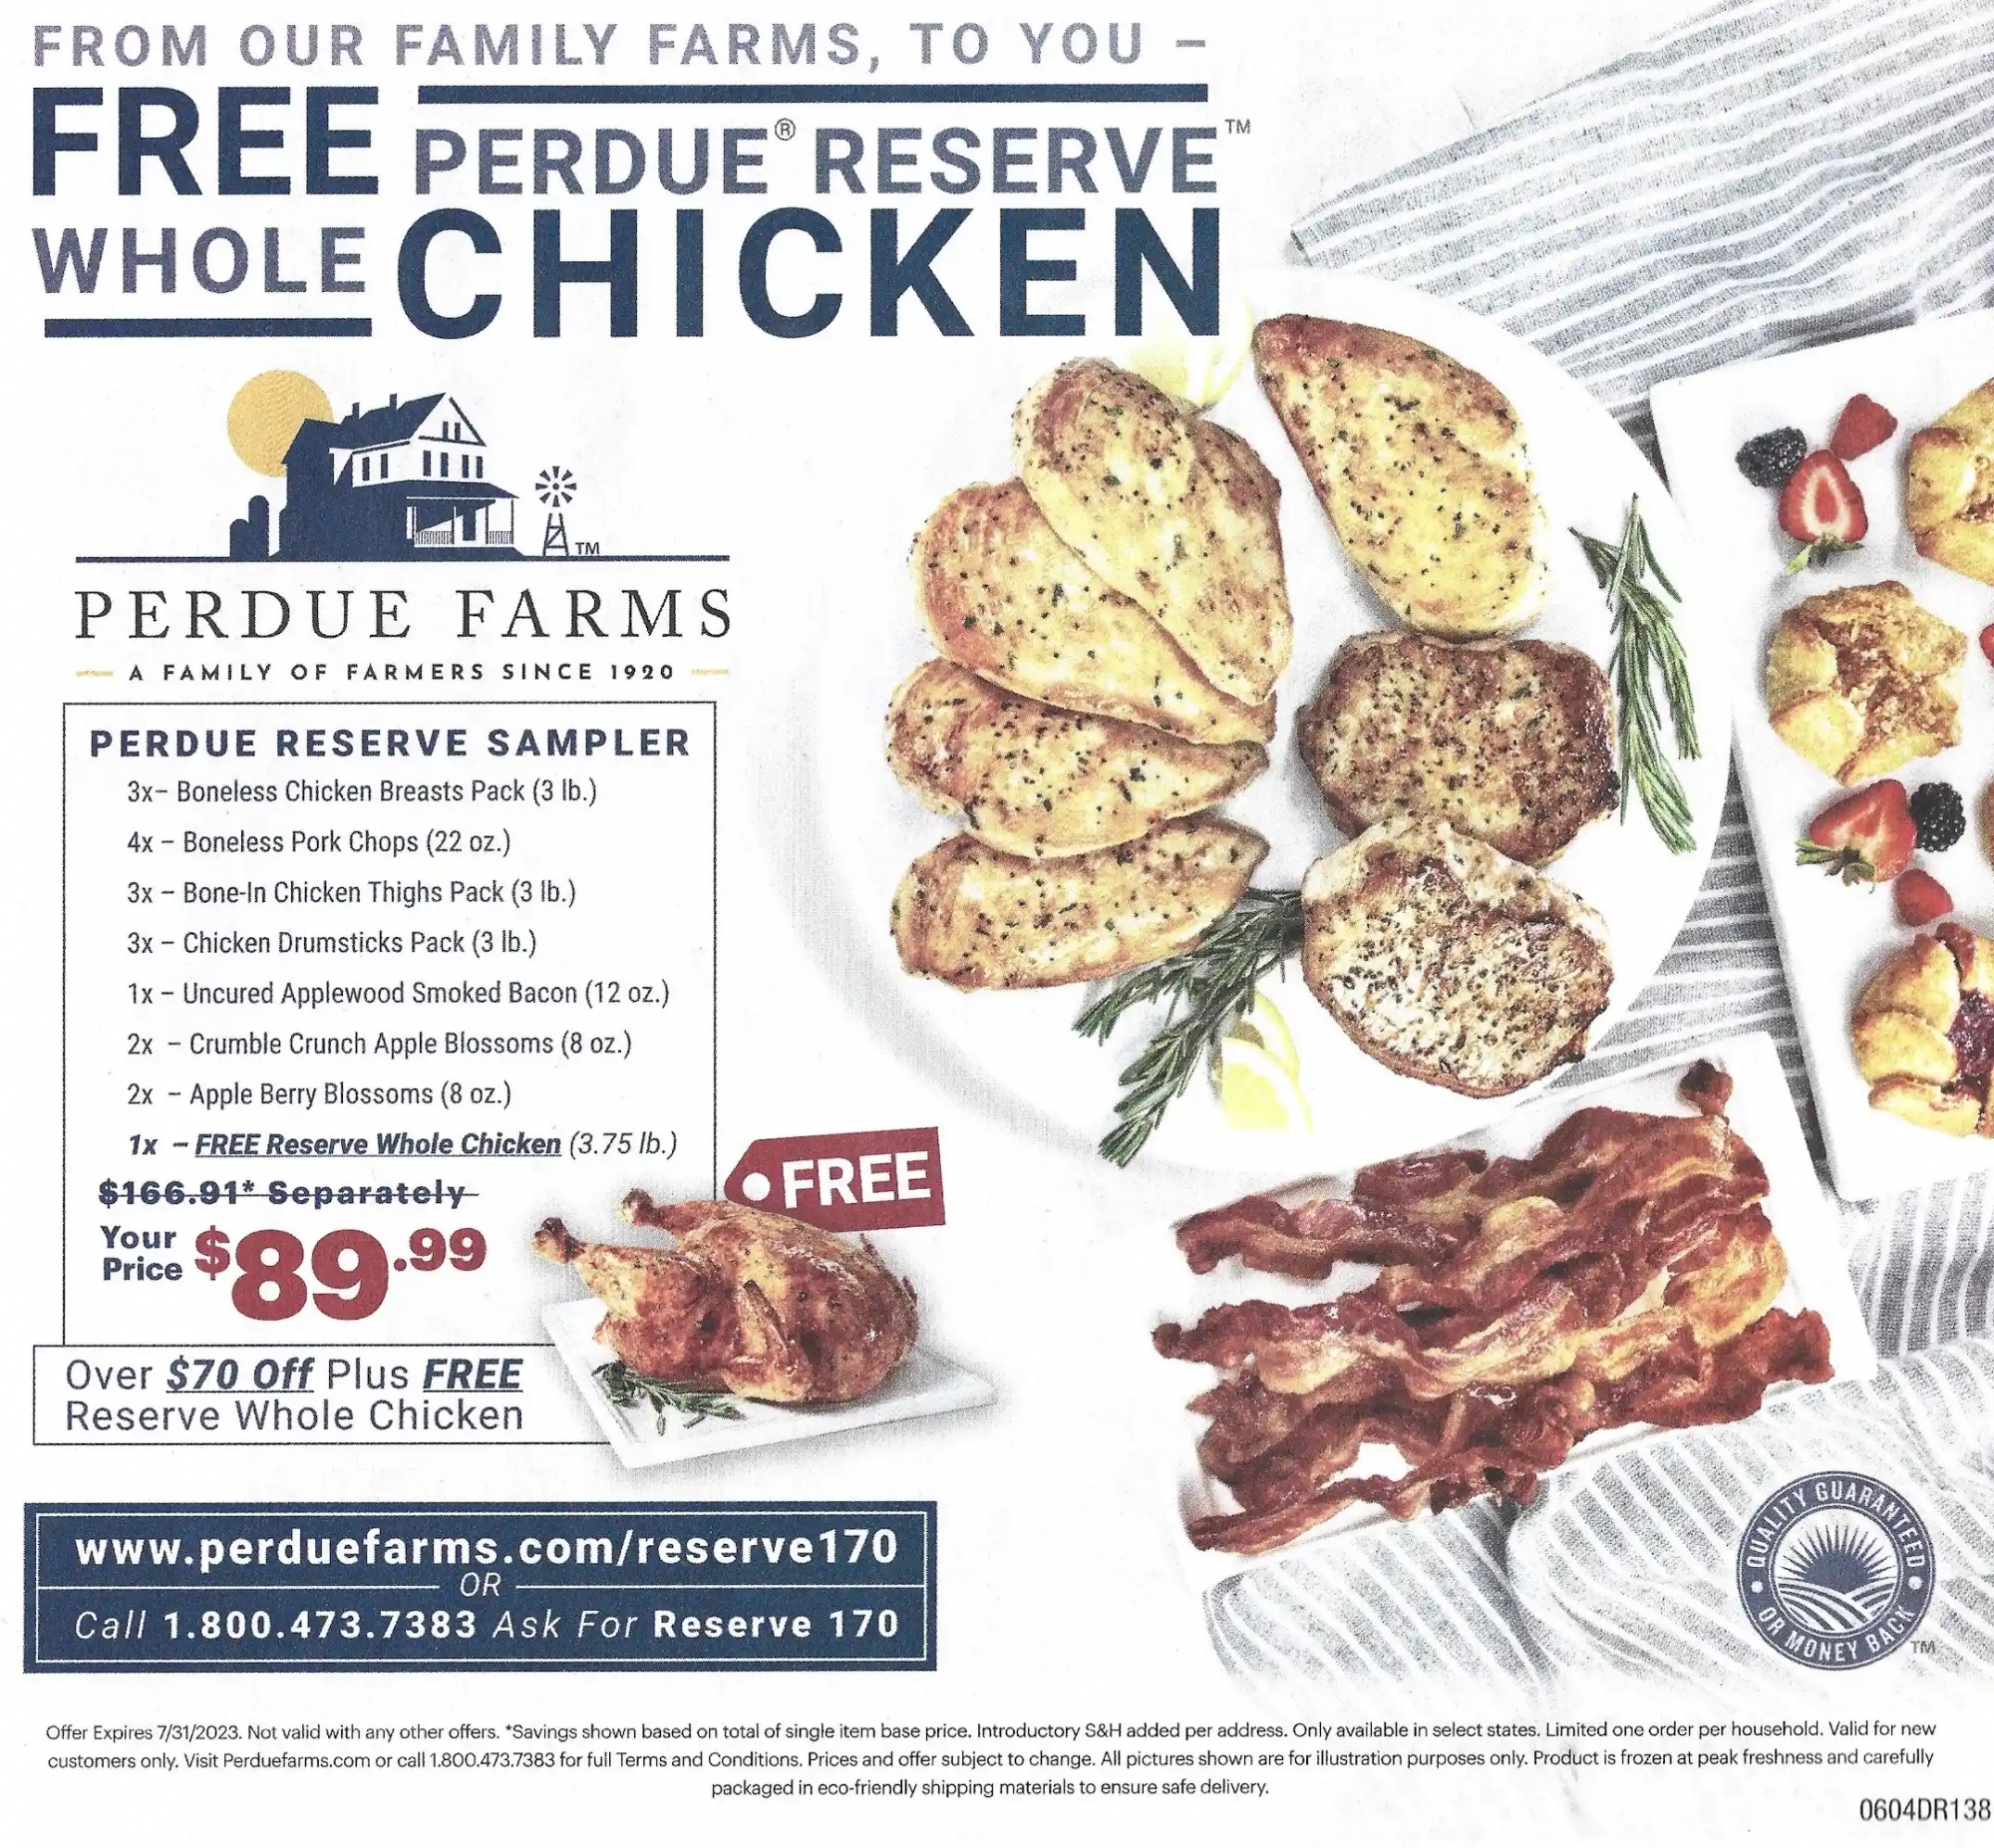 Perdue Farms Free Whole Chicken Promo Code - Expires 07/31/2023